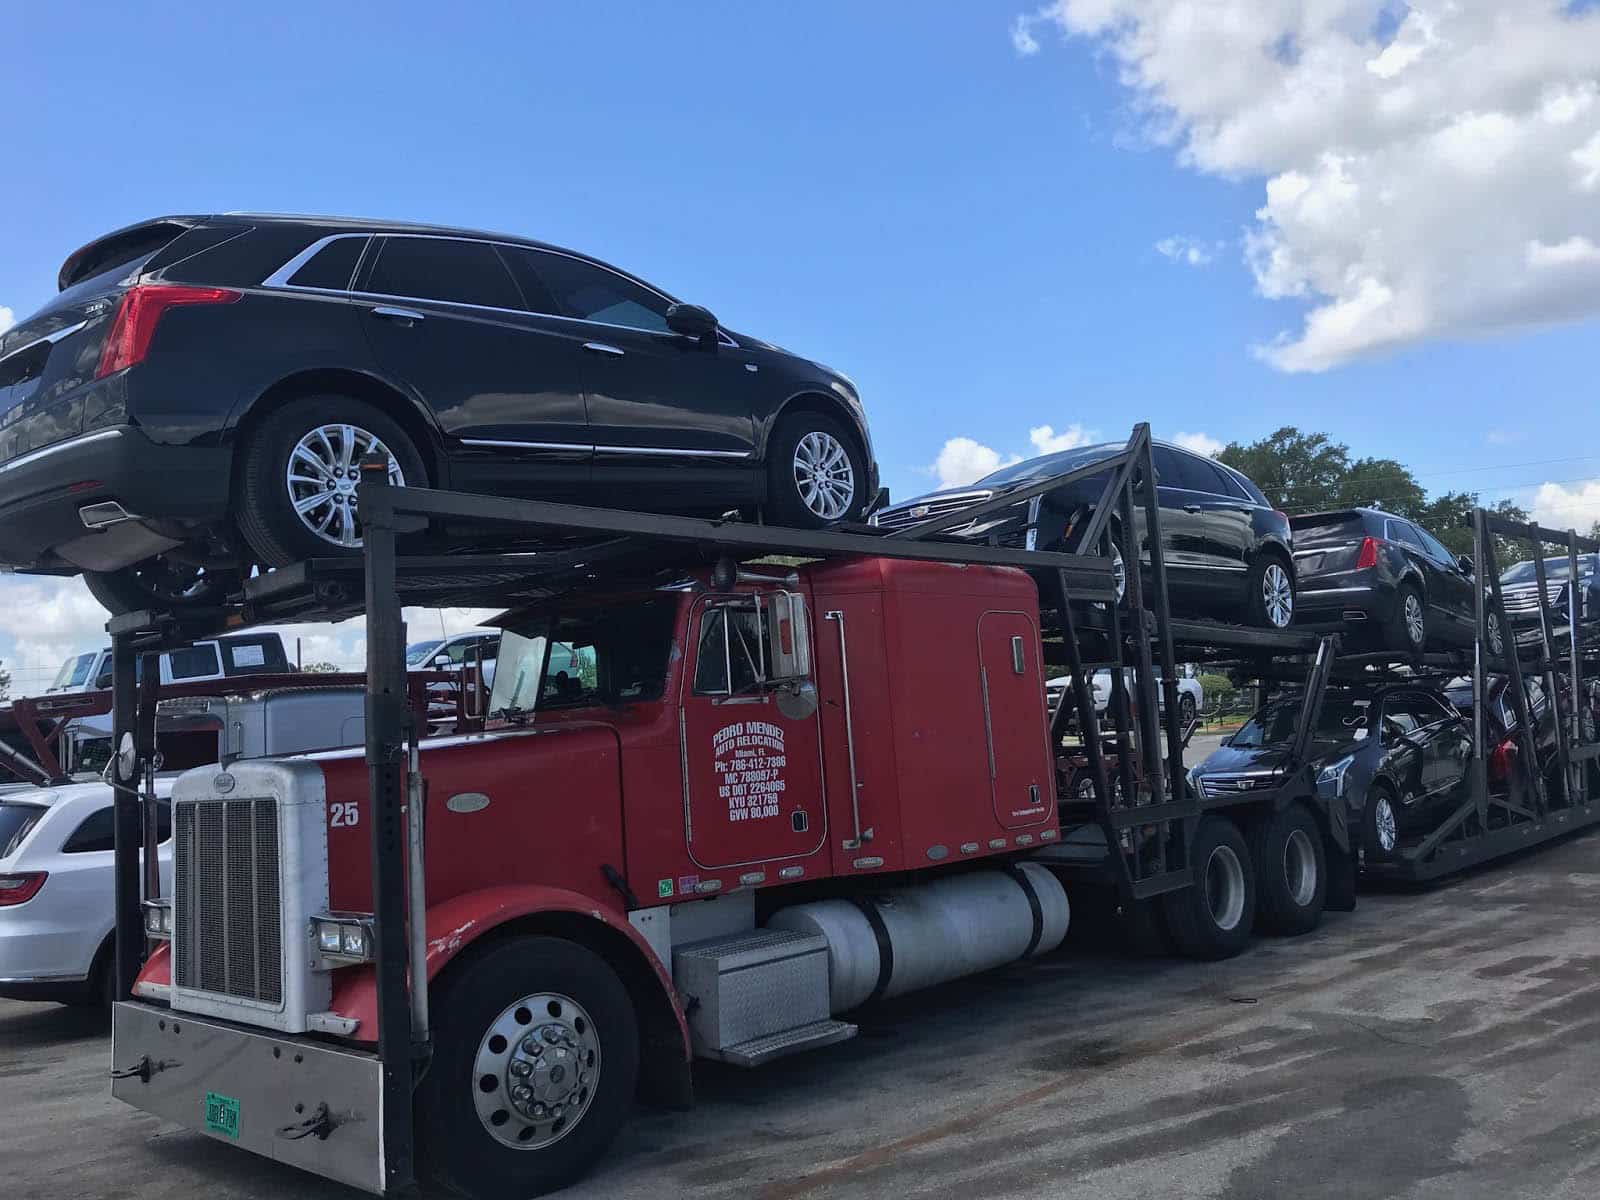 Transporting SUVs